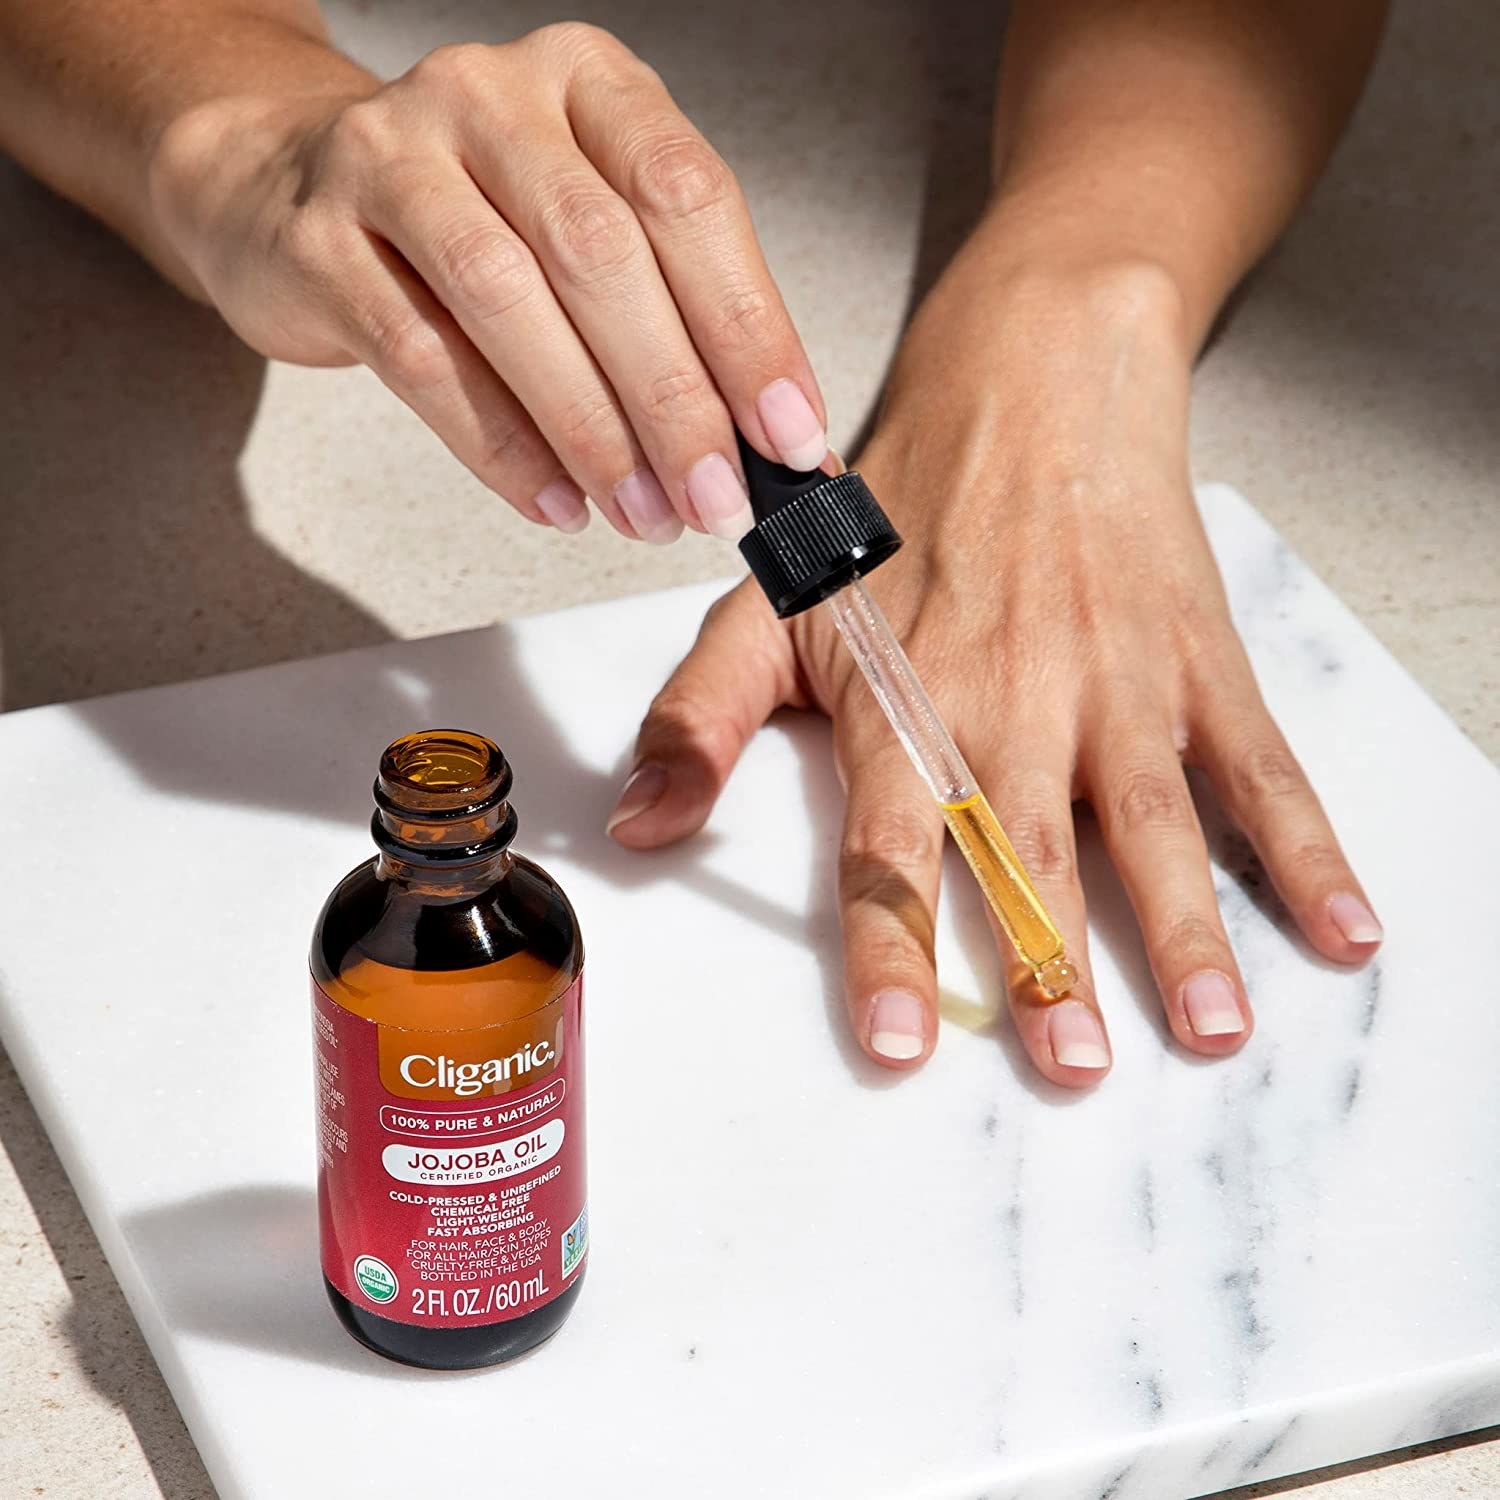 A person applying the jojoba oil to their nails